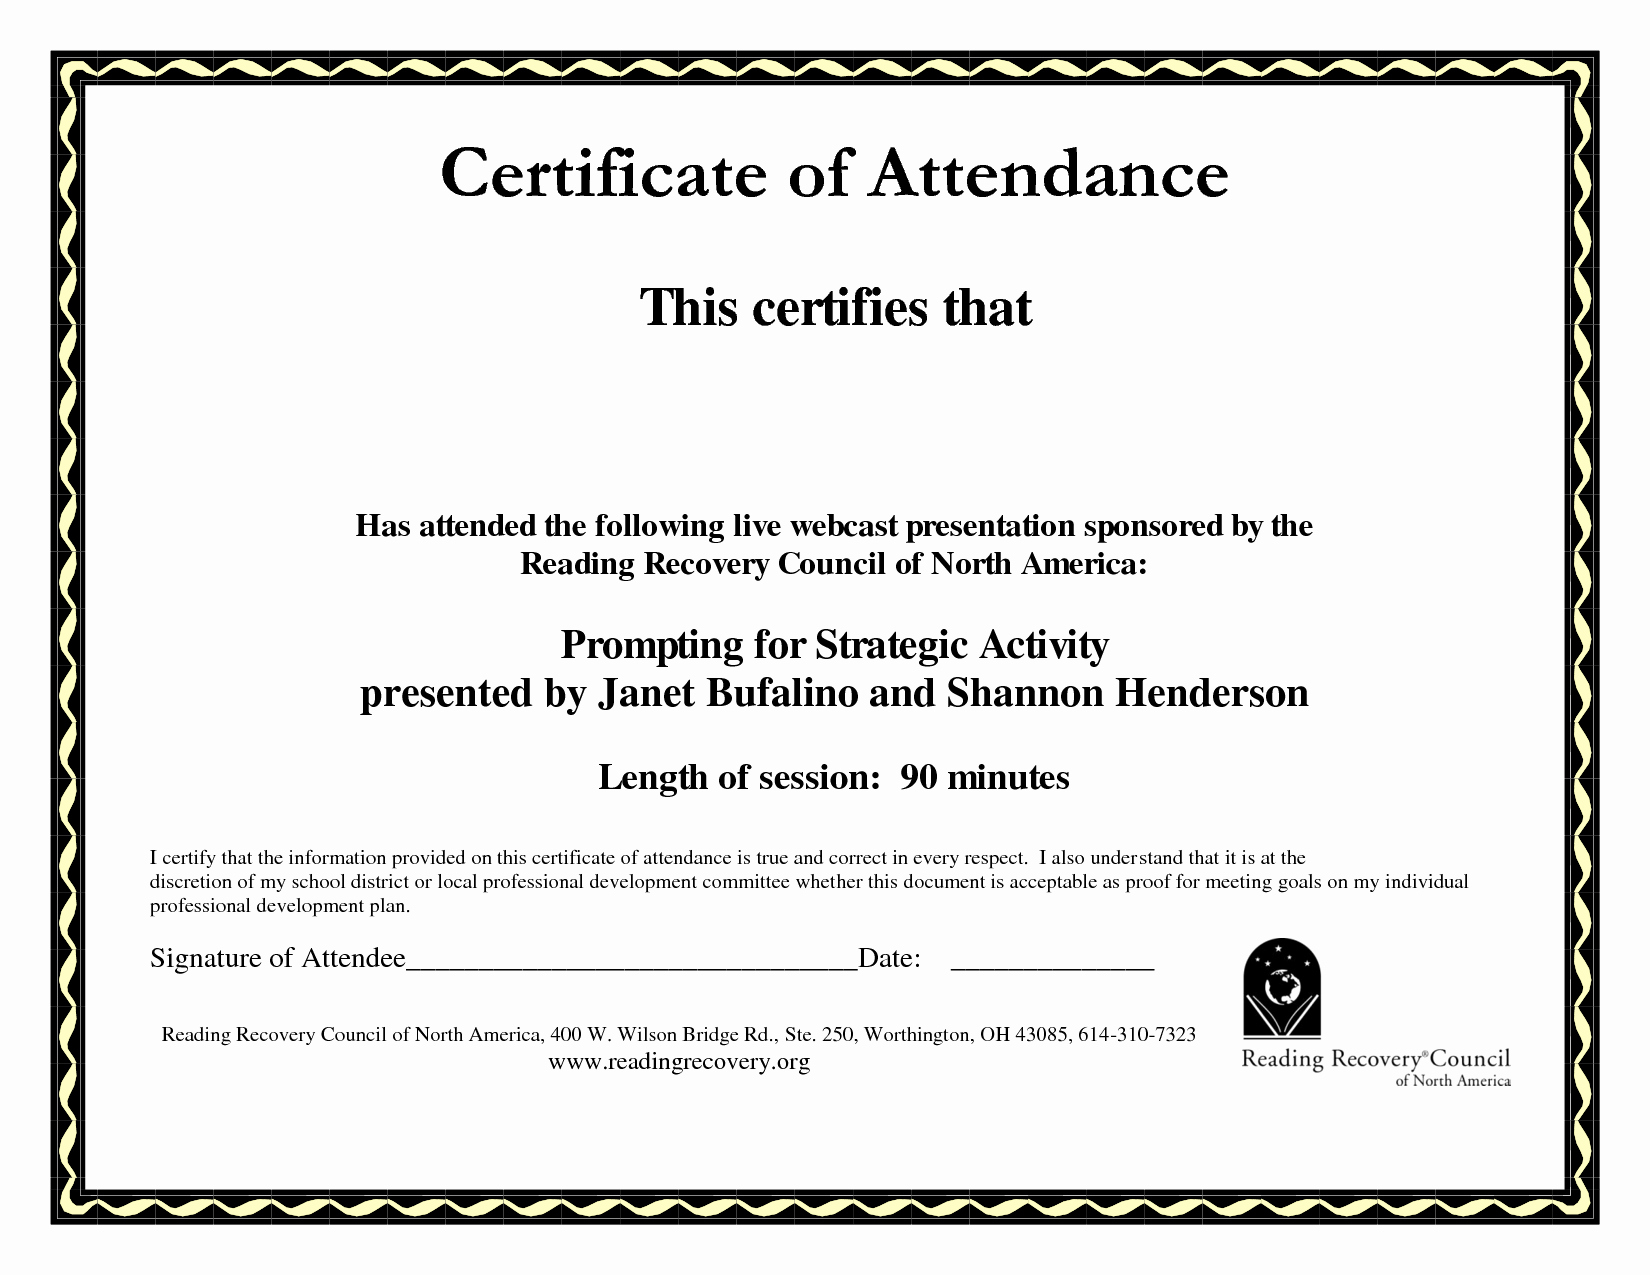 30 Ceu Certificate Of Attendance Template | Pryncepality Intended For Ceu Certificate Template